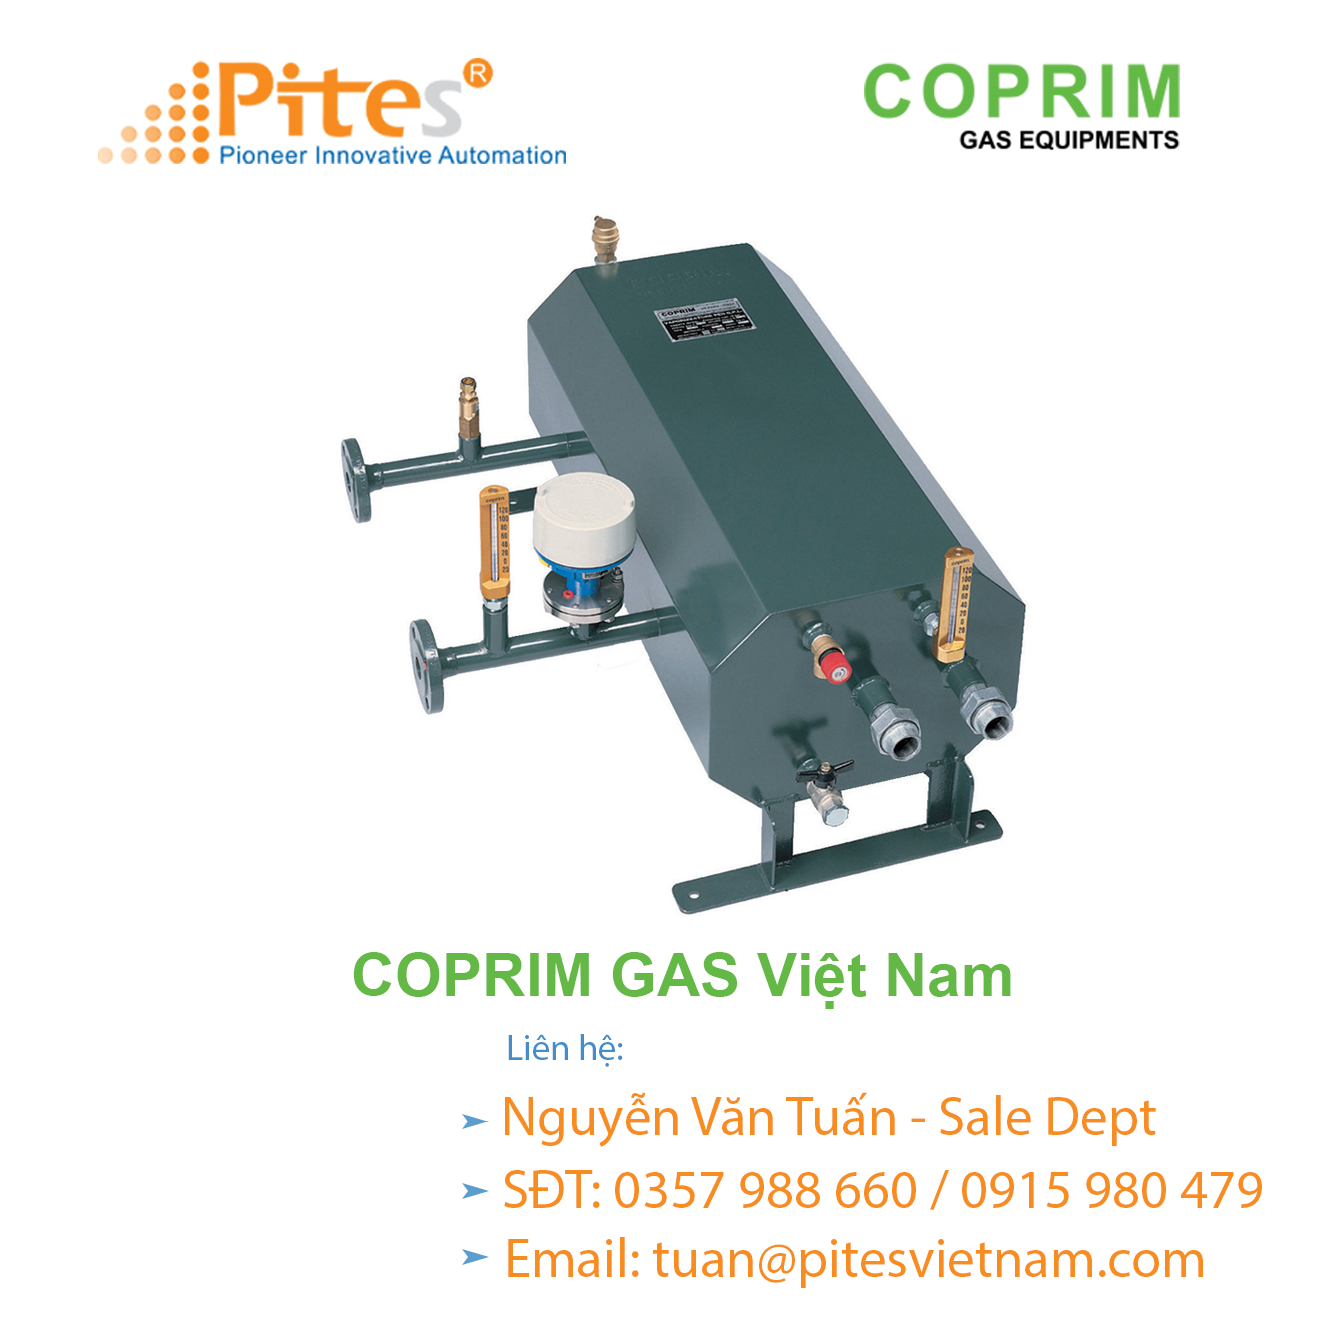 coprim-gas-vietnam-coprim-gas-viet-nam-dai-ly-coprim-gas-list-code-coprim-gas-part-12.png